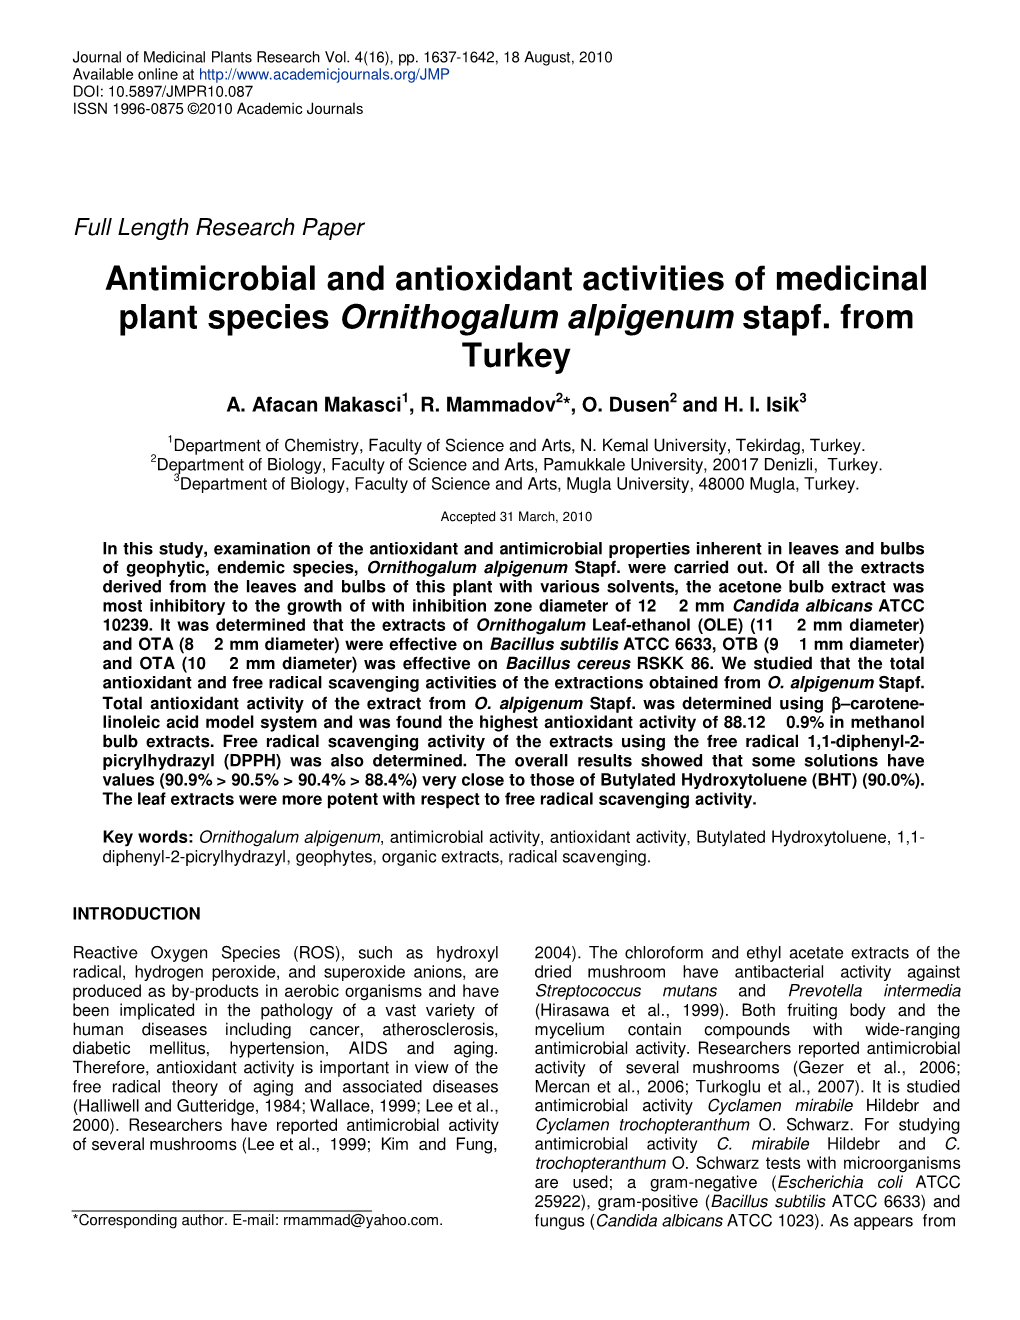 Antimicrobial and Antioxidant Activities of Medicinal Plant Species Ornithogalum Alpigenum Stapf